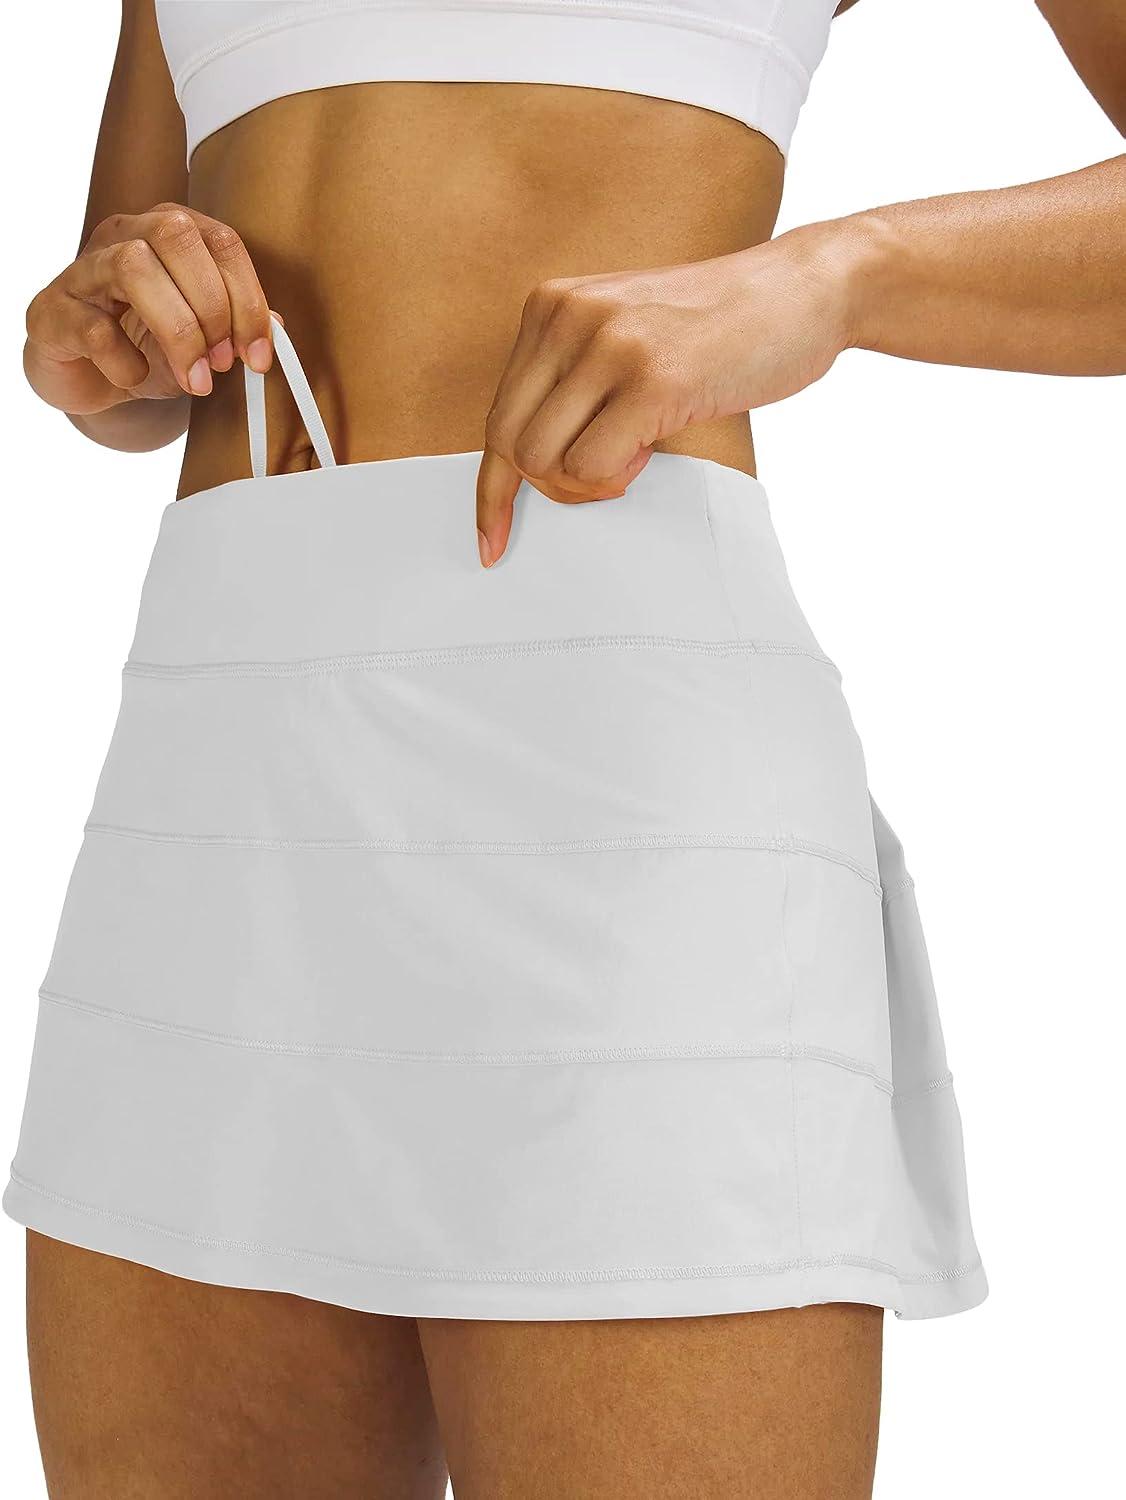 MEIVSO Women's Workout Tennis Dress Athletic Sleeveless Golf Dress Built-in  Bra & Shorts Active Sportswear